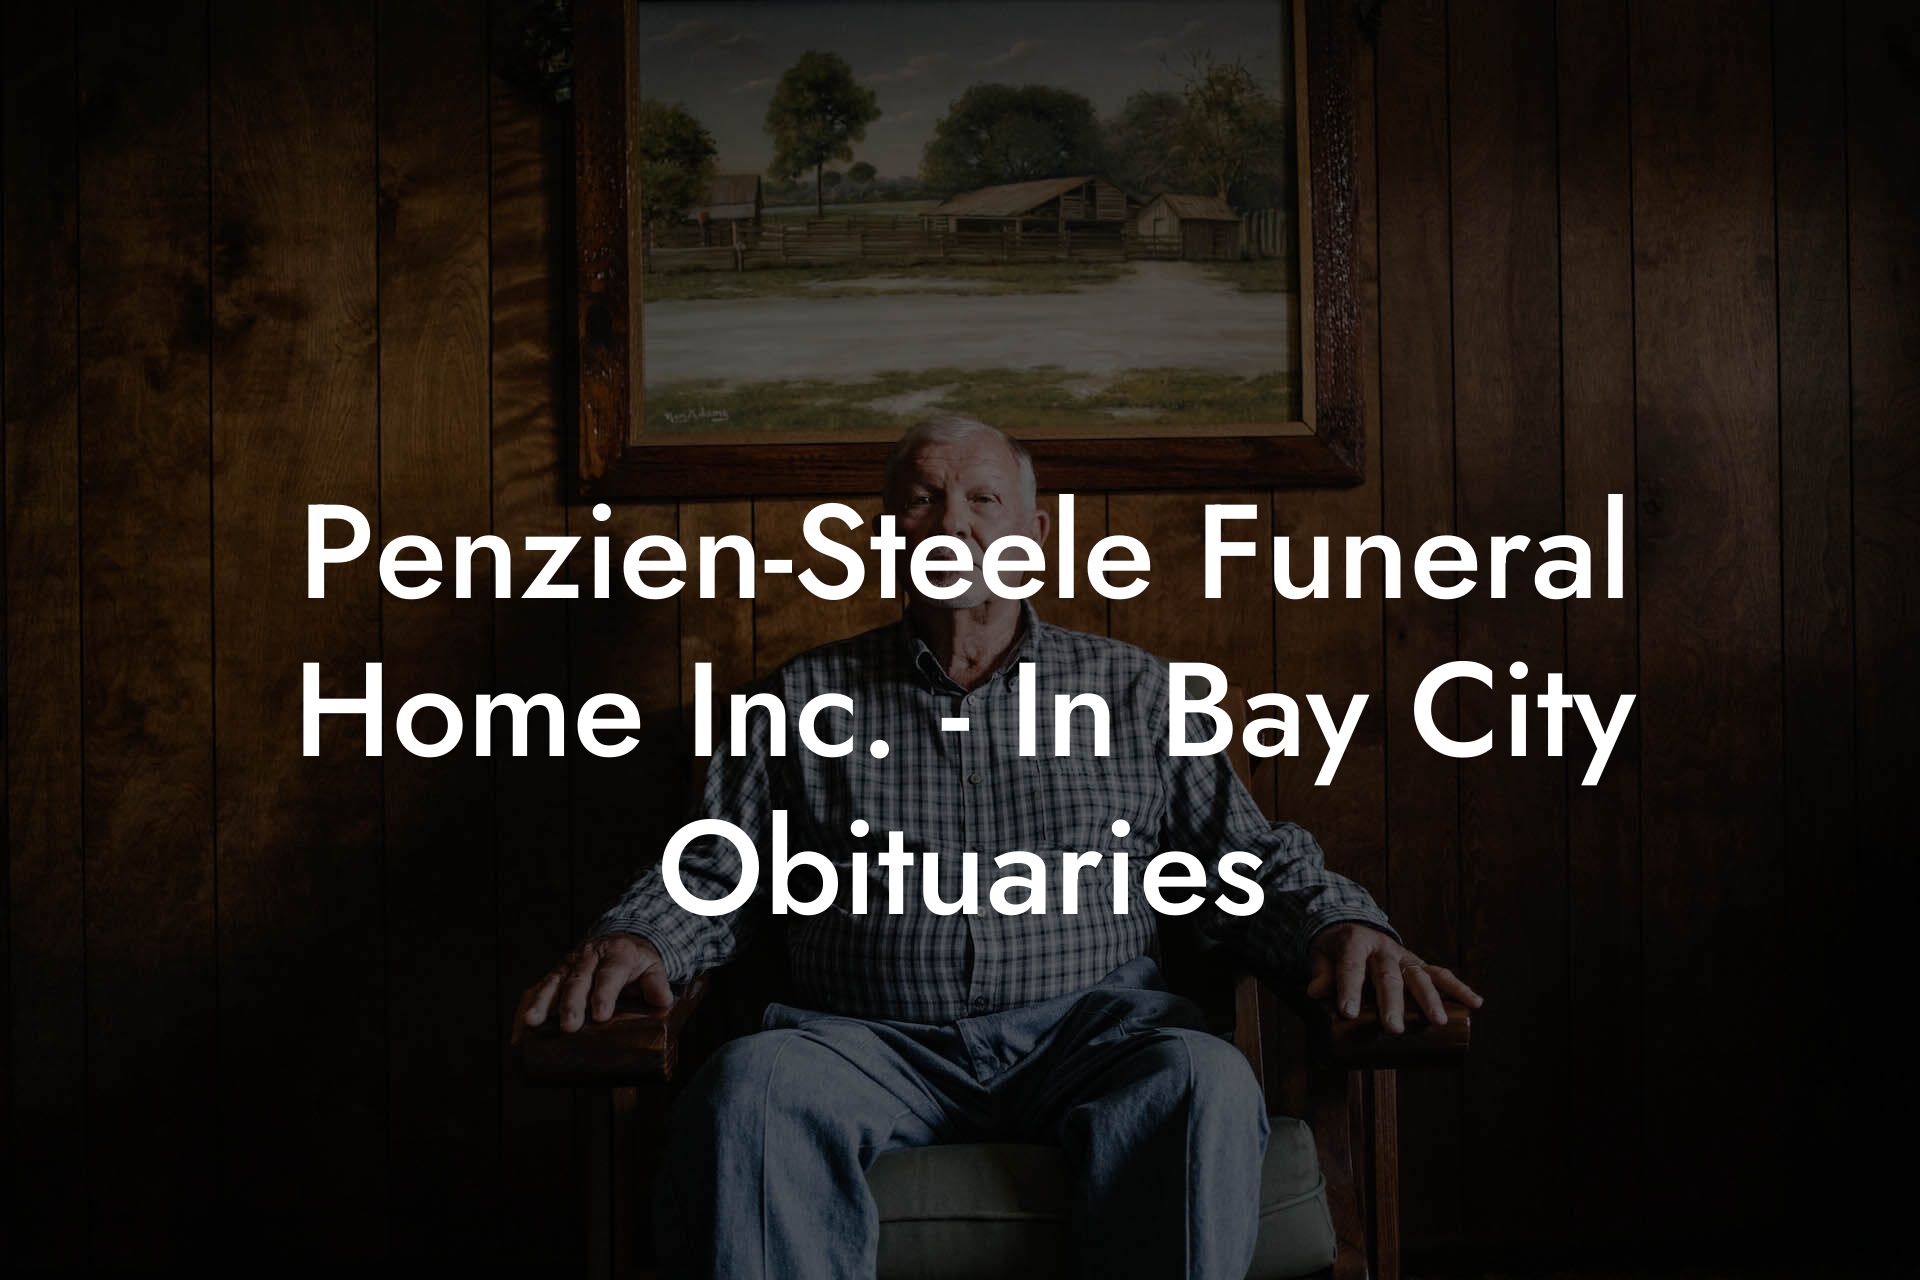 Penzien-Steele Funeral Home Inc. - In Bay City Obituaries